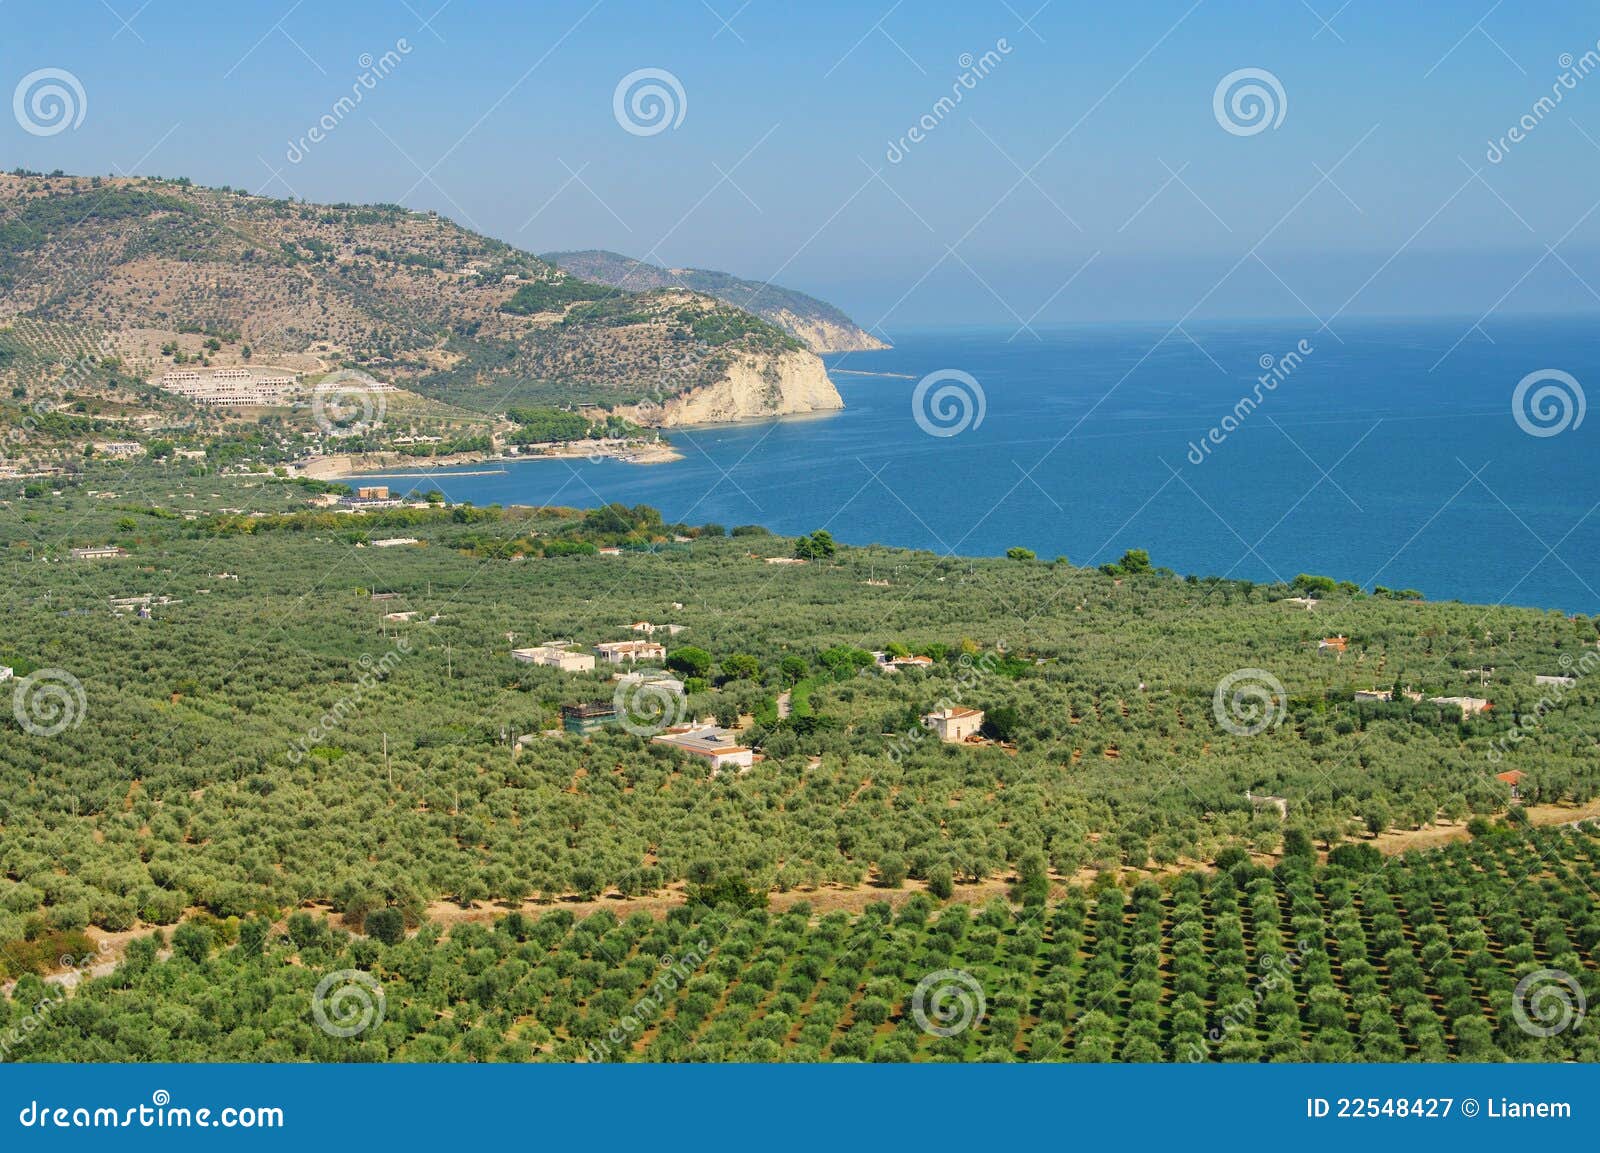 gargano olive grove